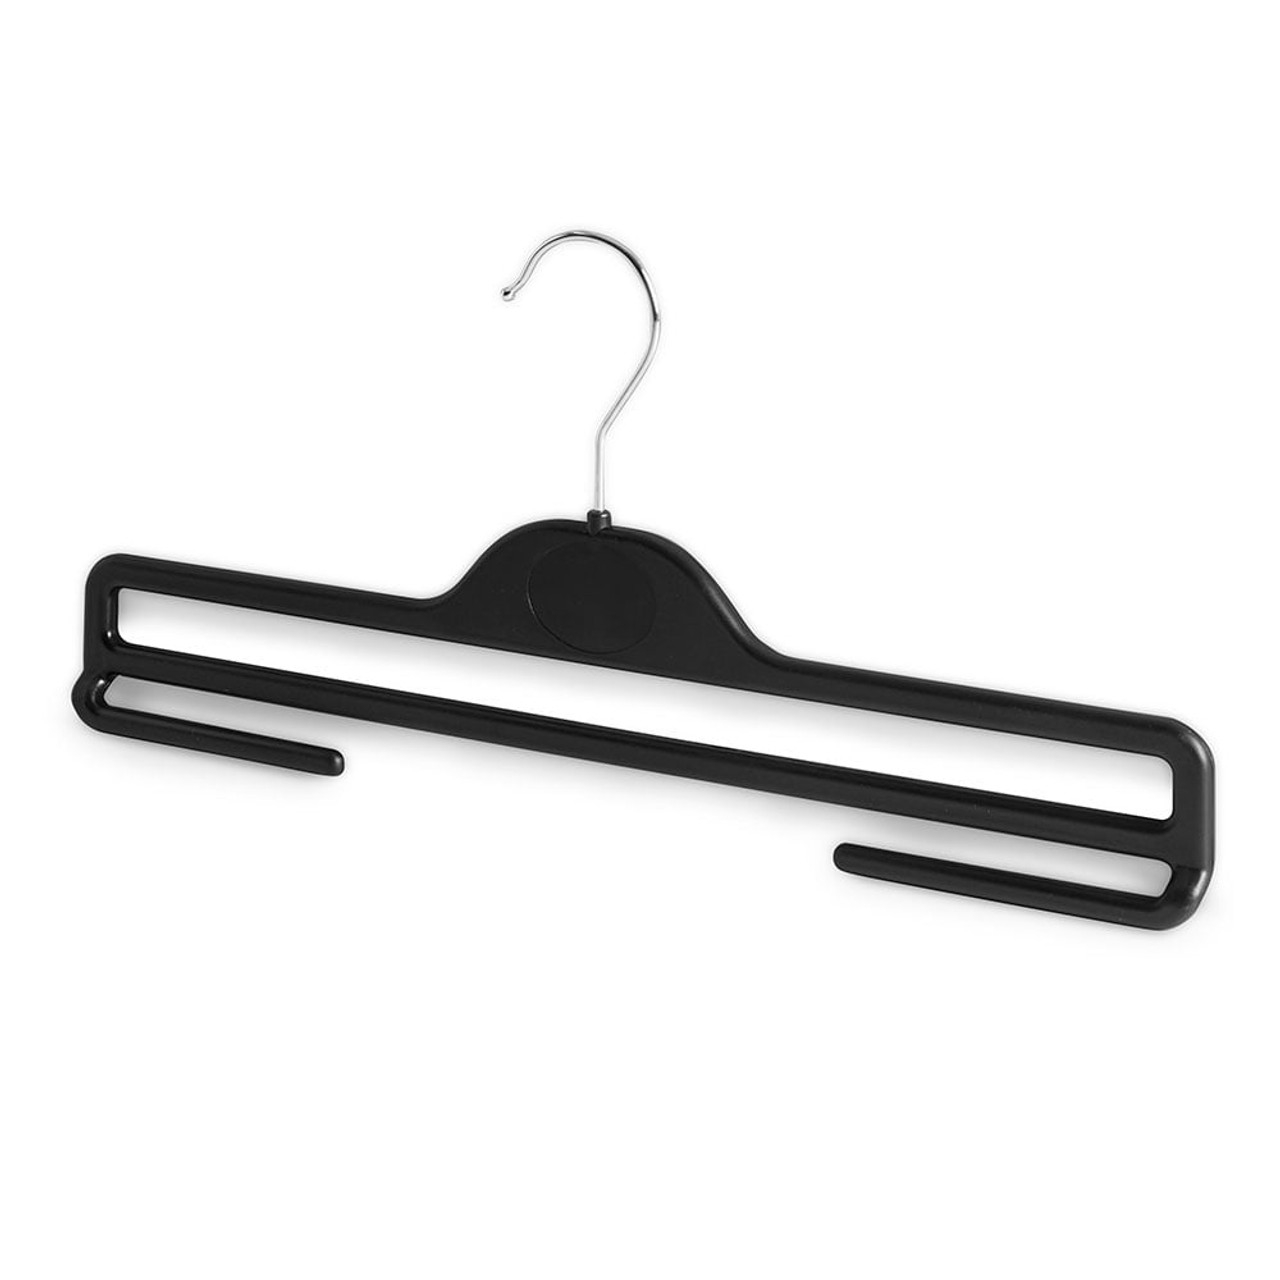 SPRUTTIG Hanger black  IKEA